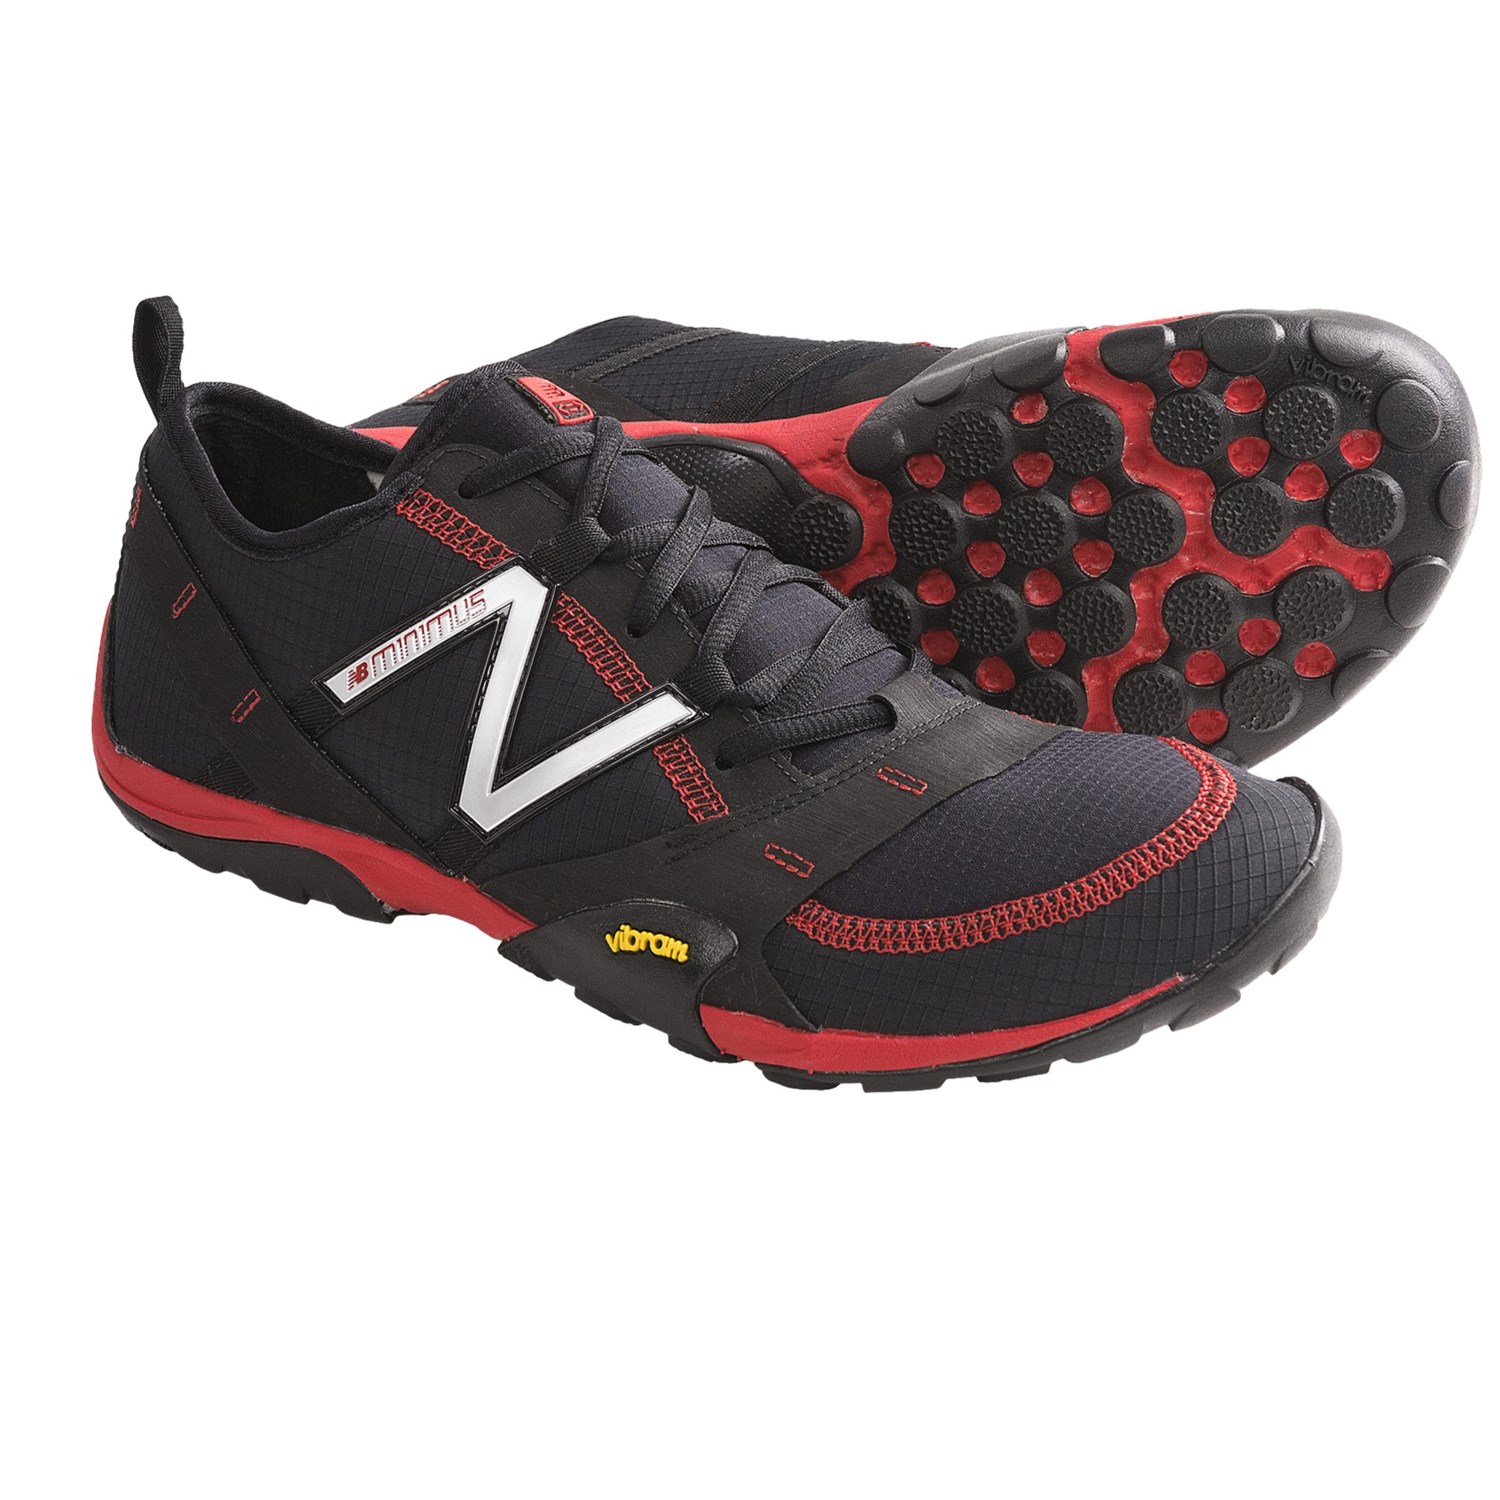 New Balance Minimus MO10 Running Shoes - Minimalist (For Men) - Save 33%